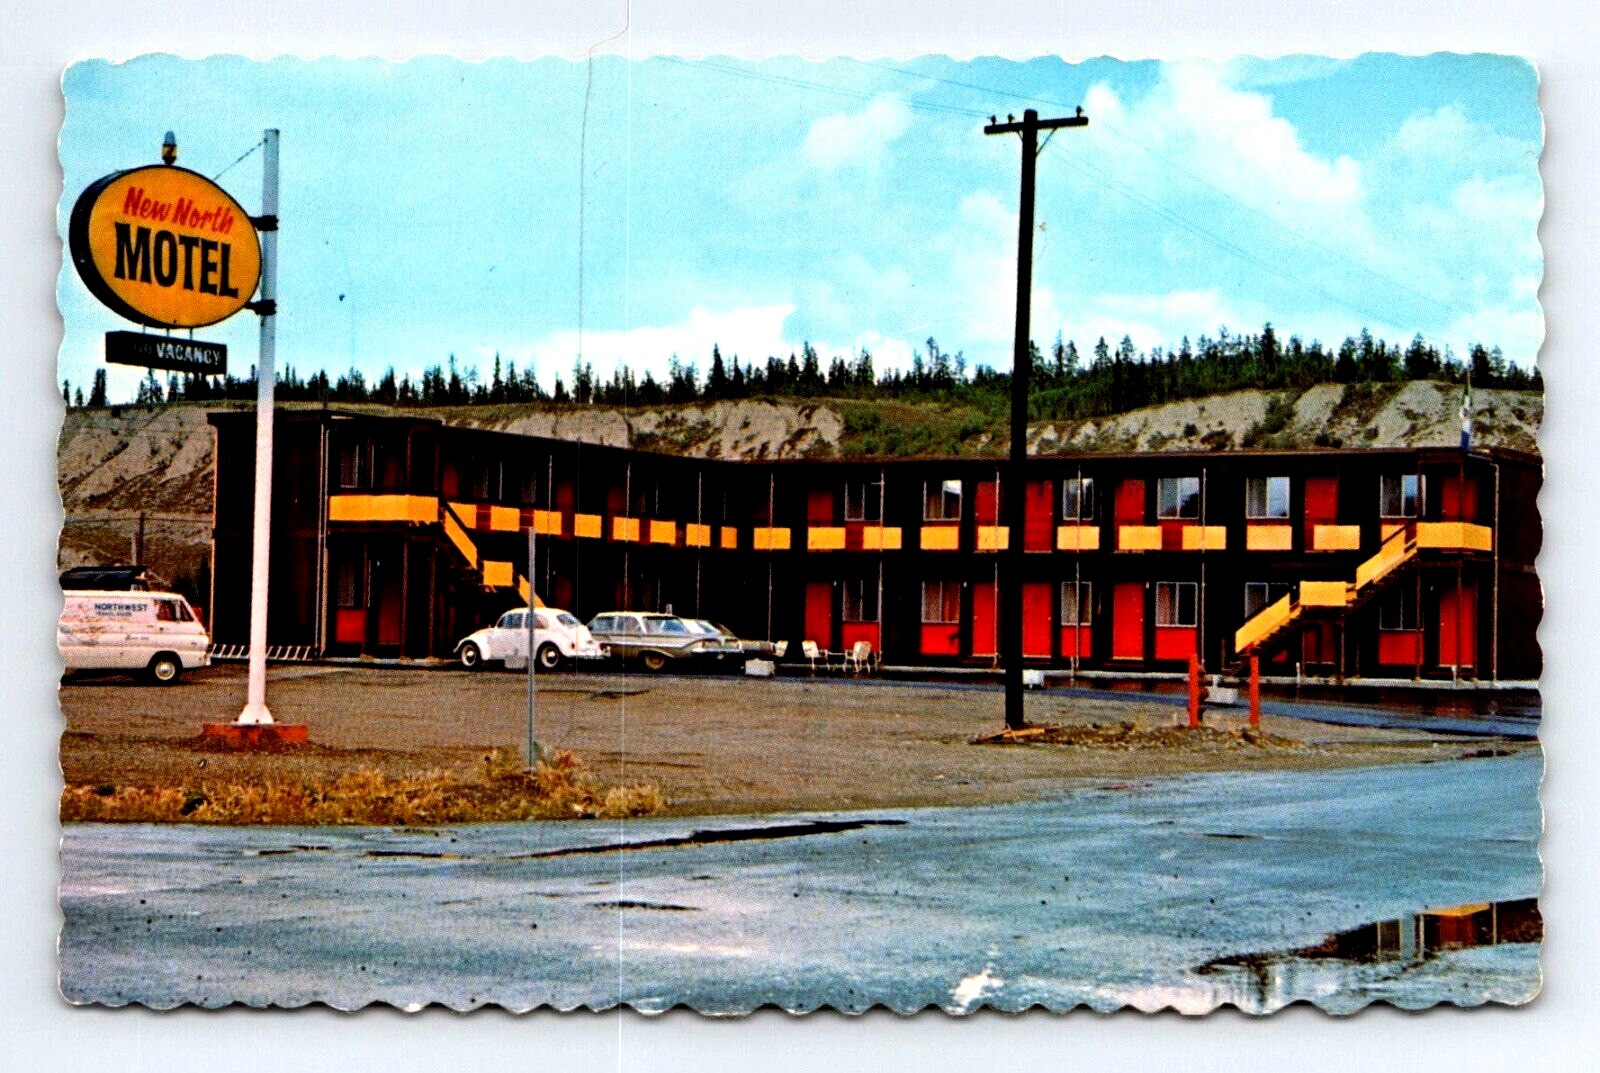 NEW NORTH MOTEL Whitehorse Yukon Alaska unposted postcard 5.5x3.5 inch